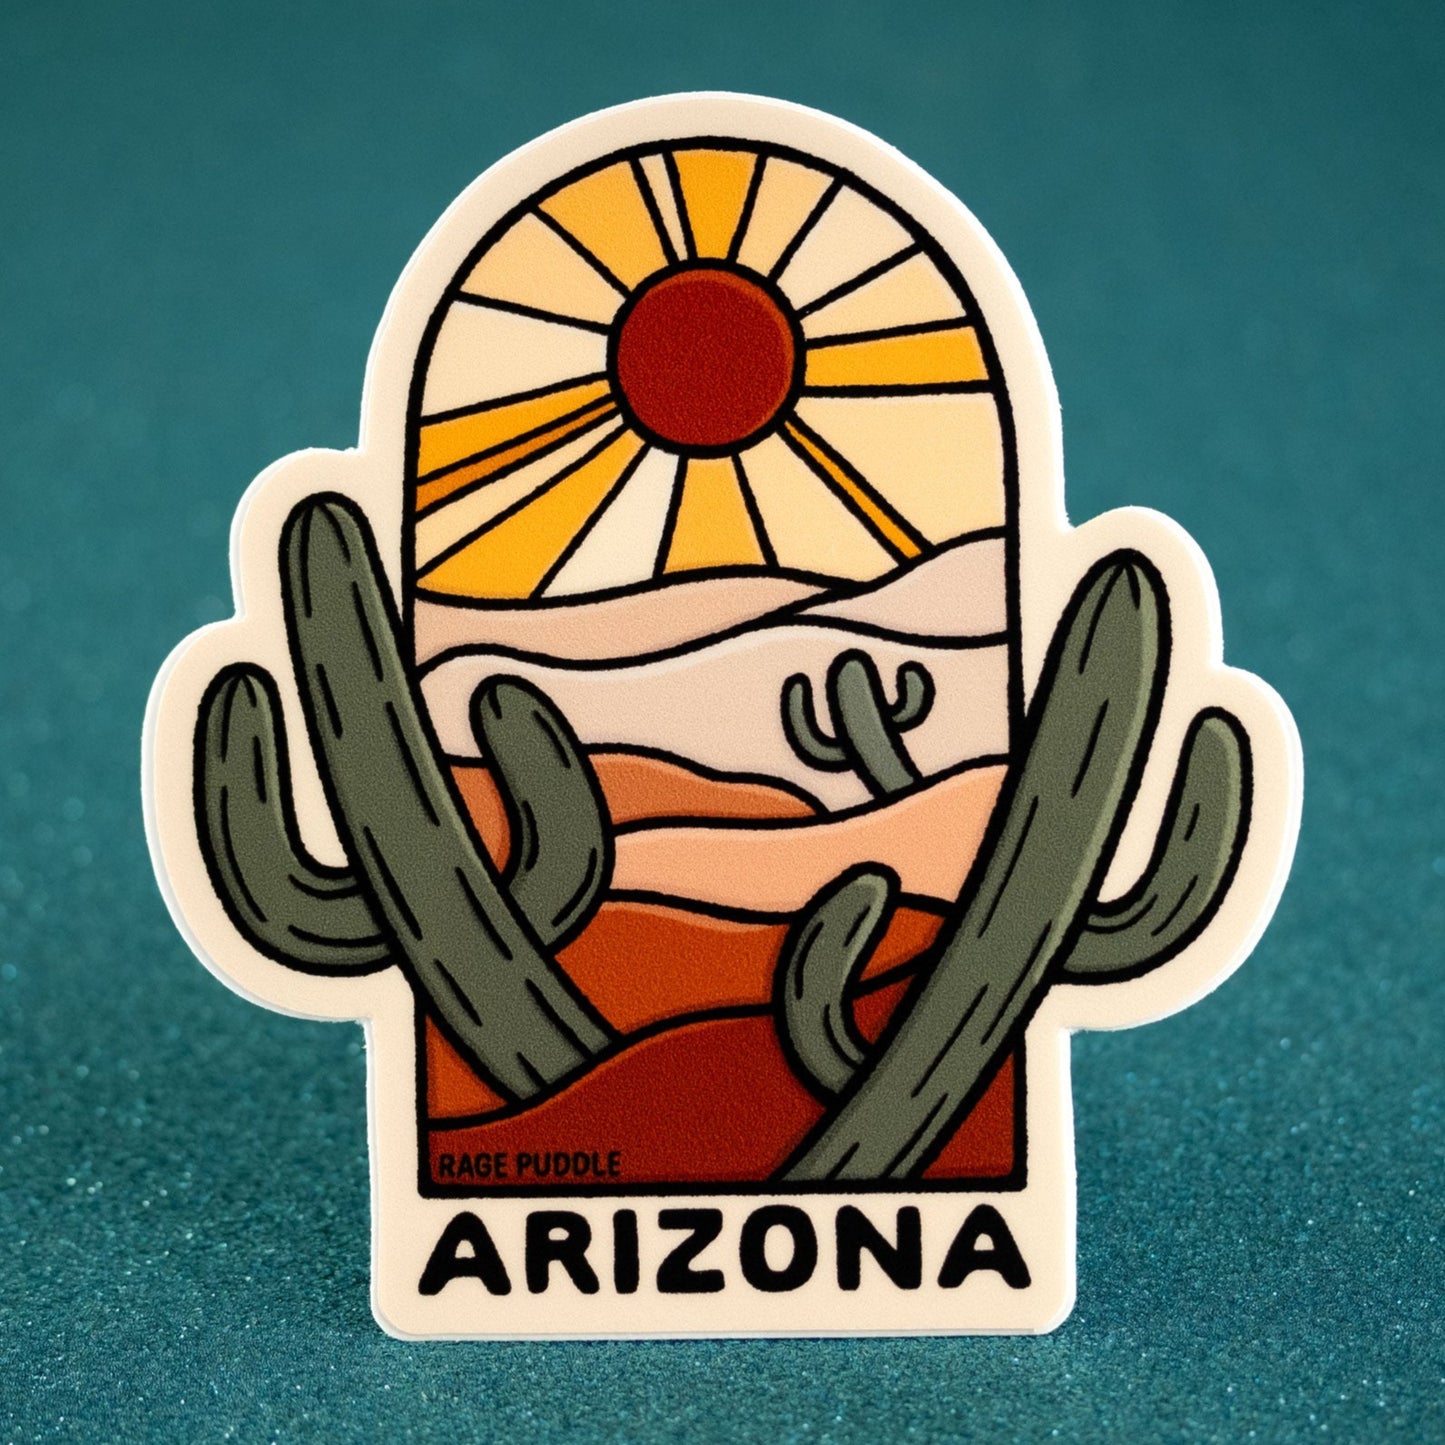 Arizona Saguaro Cactus Vinyl Sticker